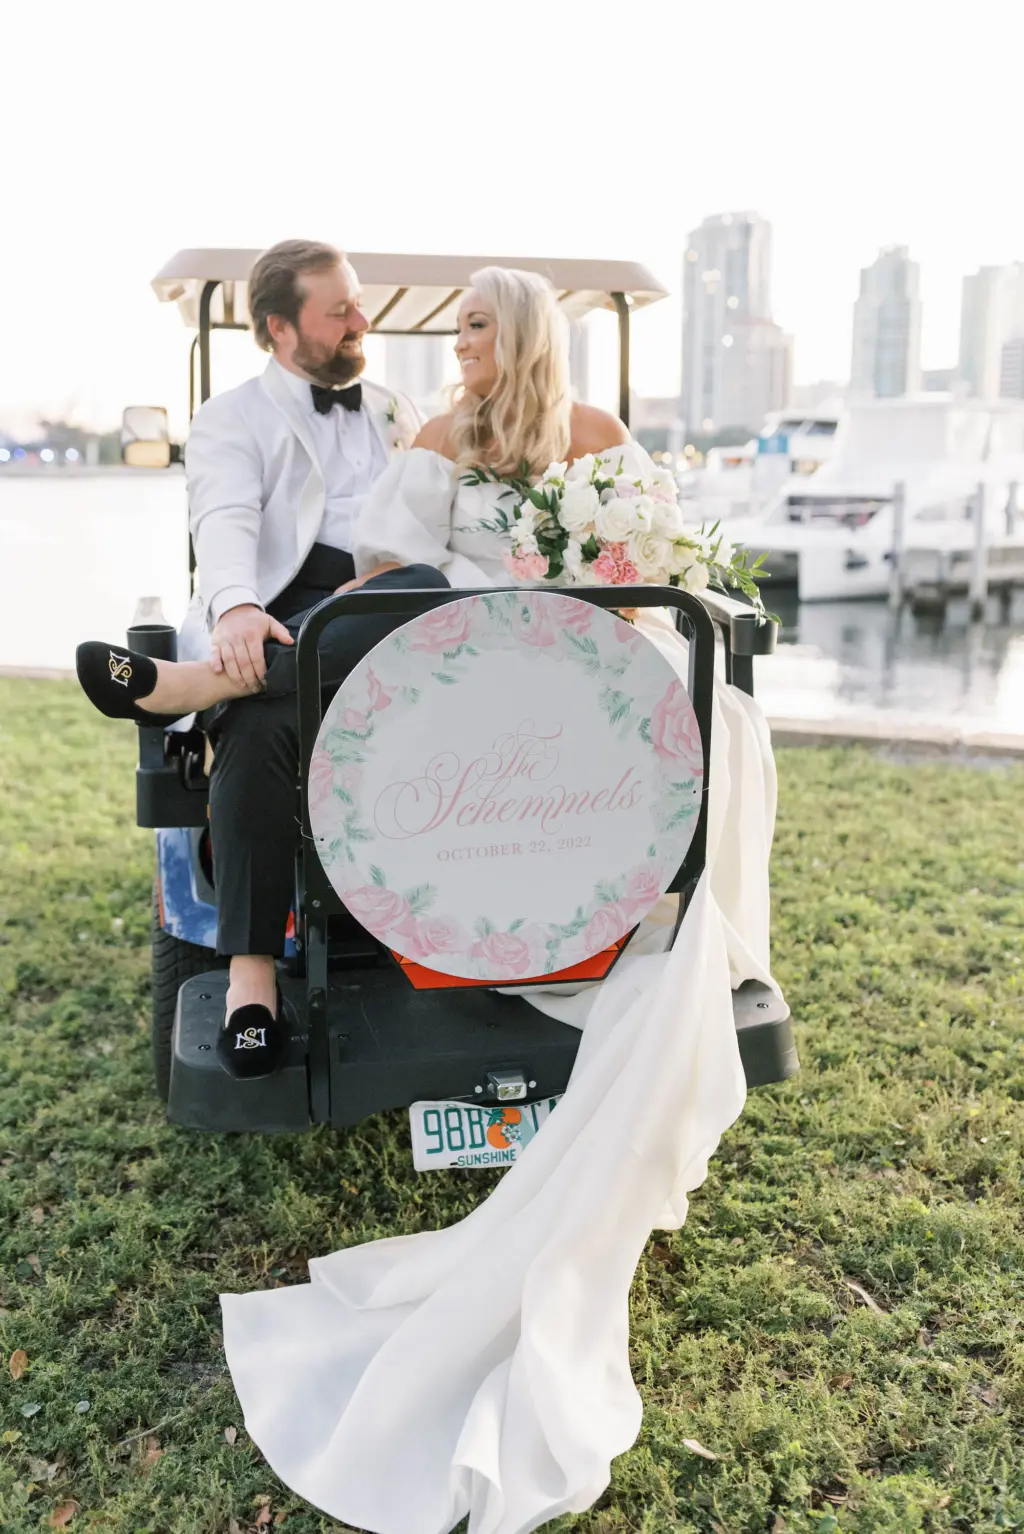 Custom Sign Ideas for Bride and Groom's Wedding Golf Cart Getaway